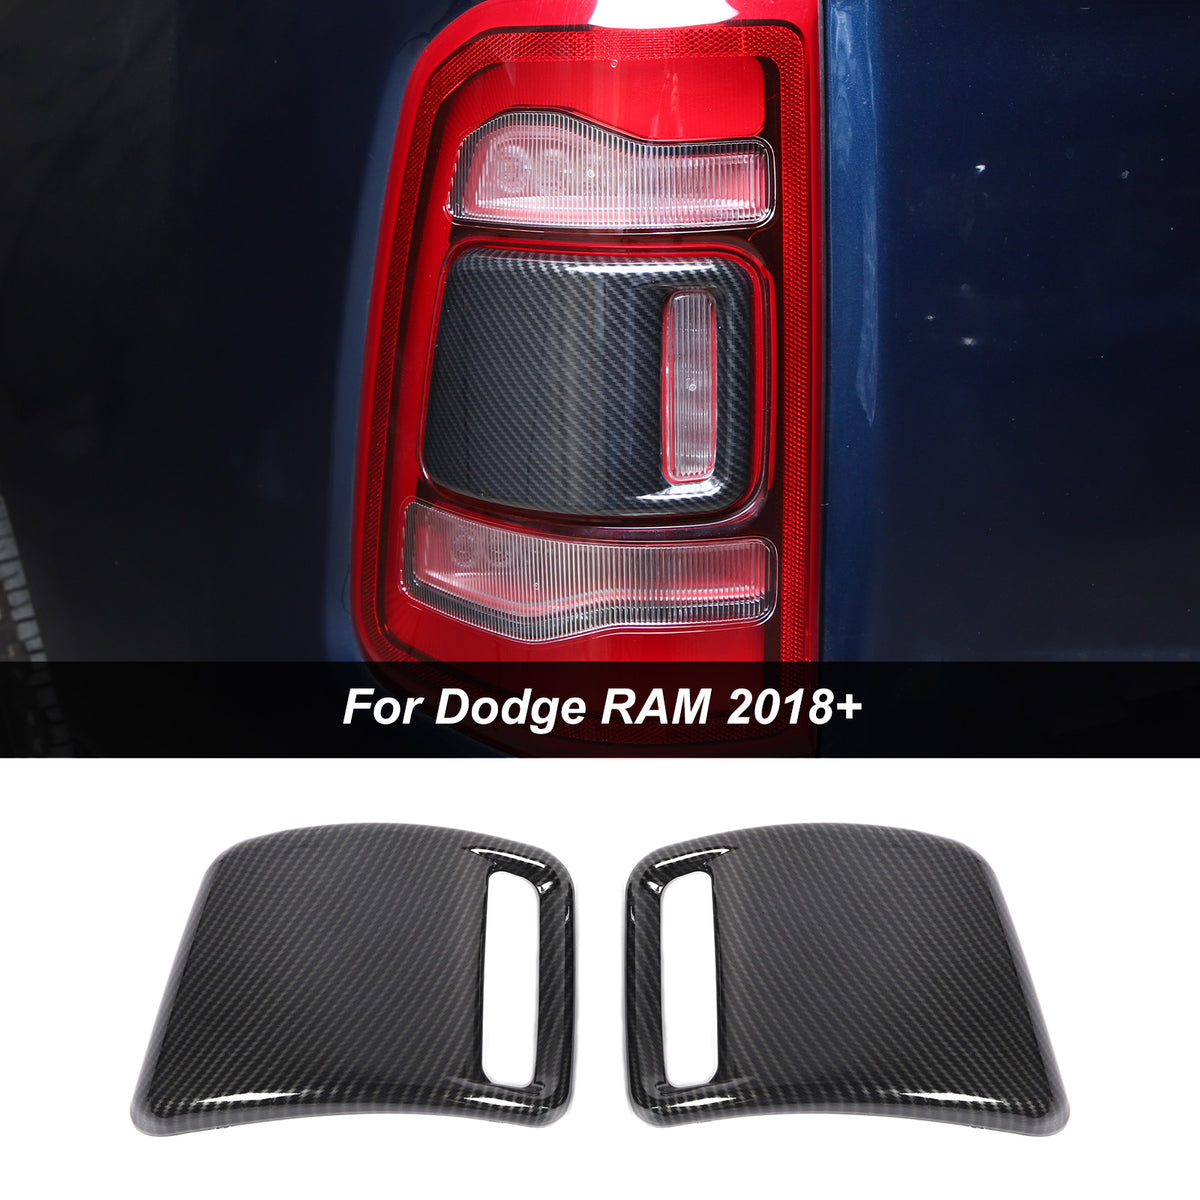 Rear Tail Light Cover Trim For Dodge Ram 2018+｜CheroCar